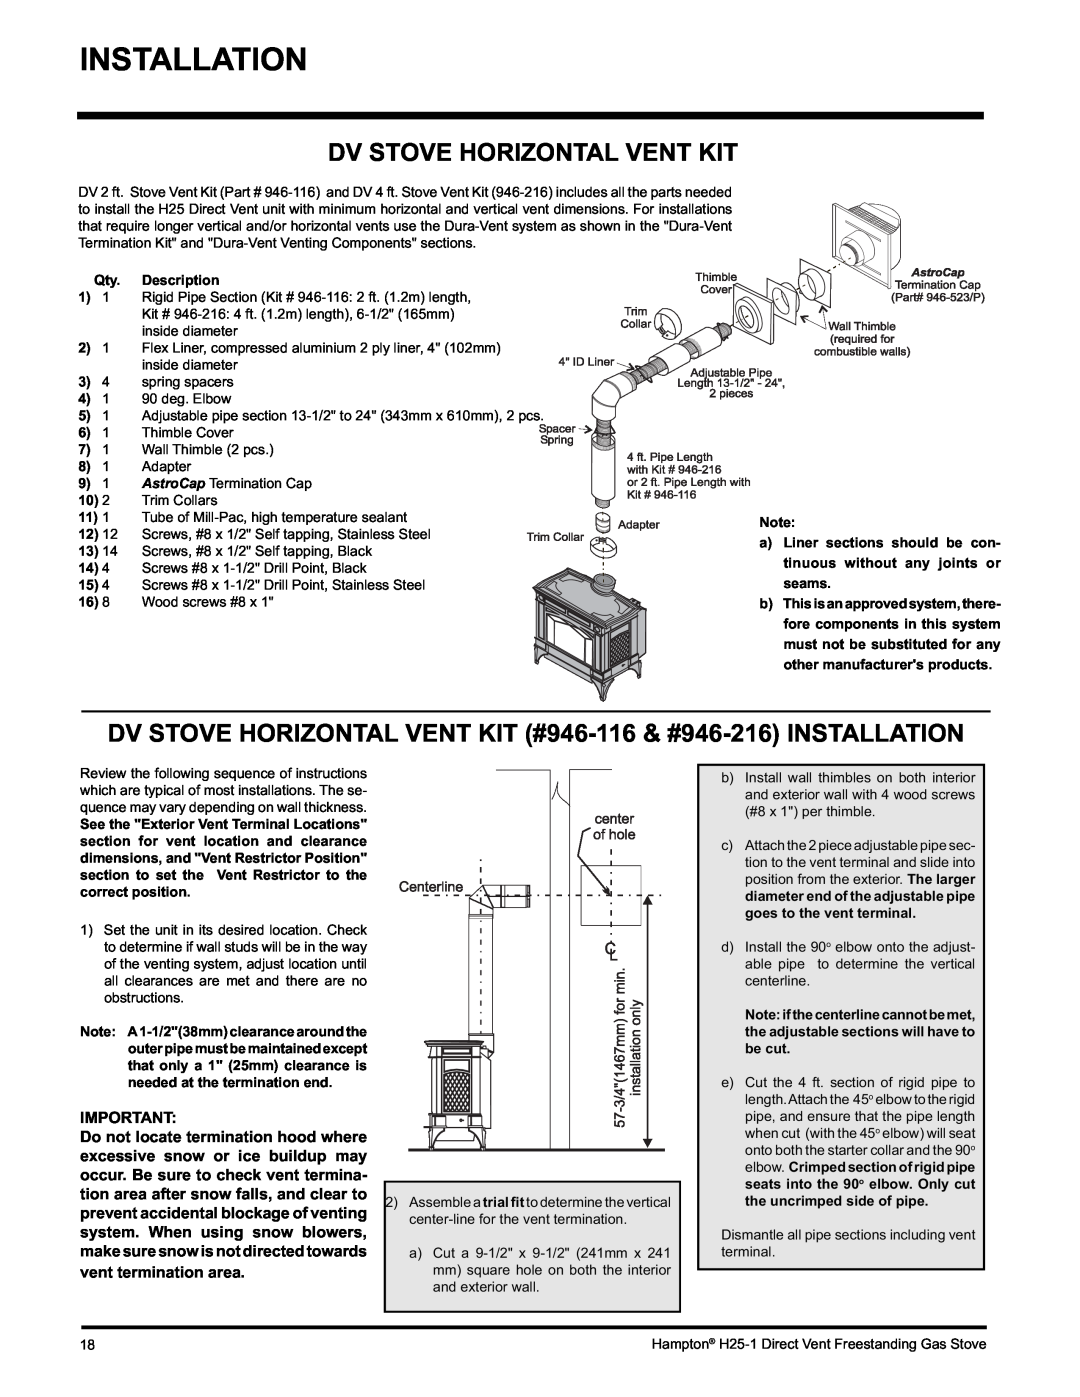 Hampton Direct H25-NG1, H25-LP1 installation manual Dv Stove Horizontal Vent Kit, Installation, Qty. Description 